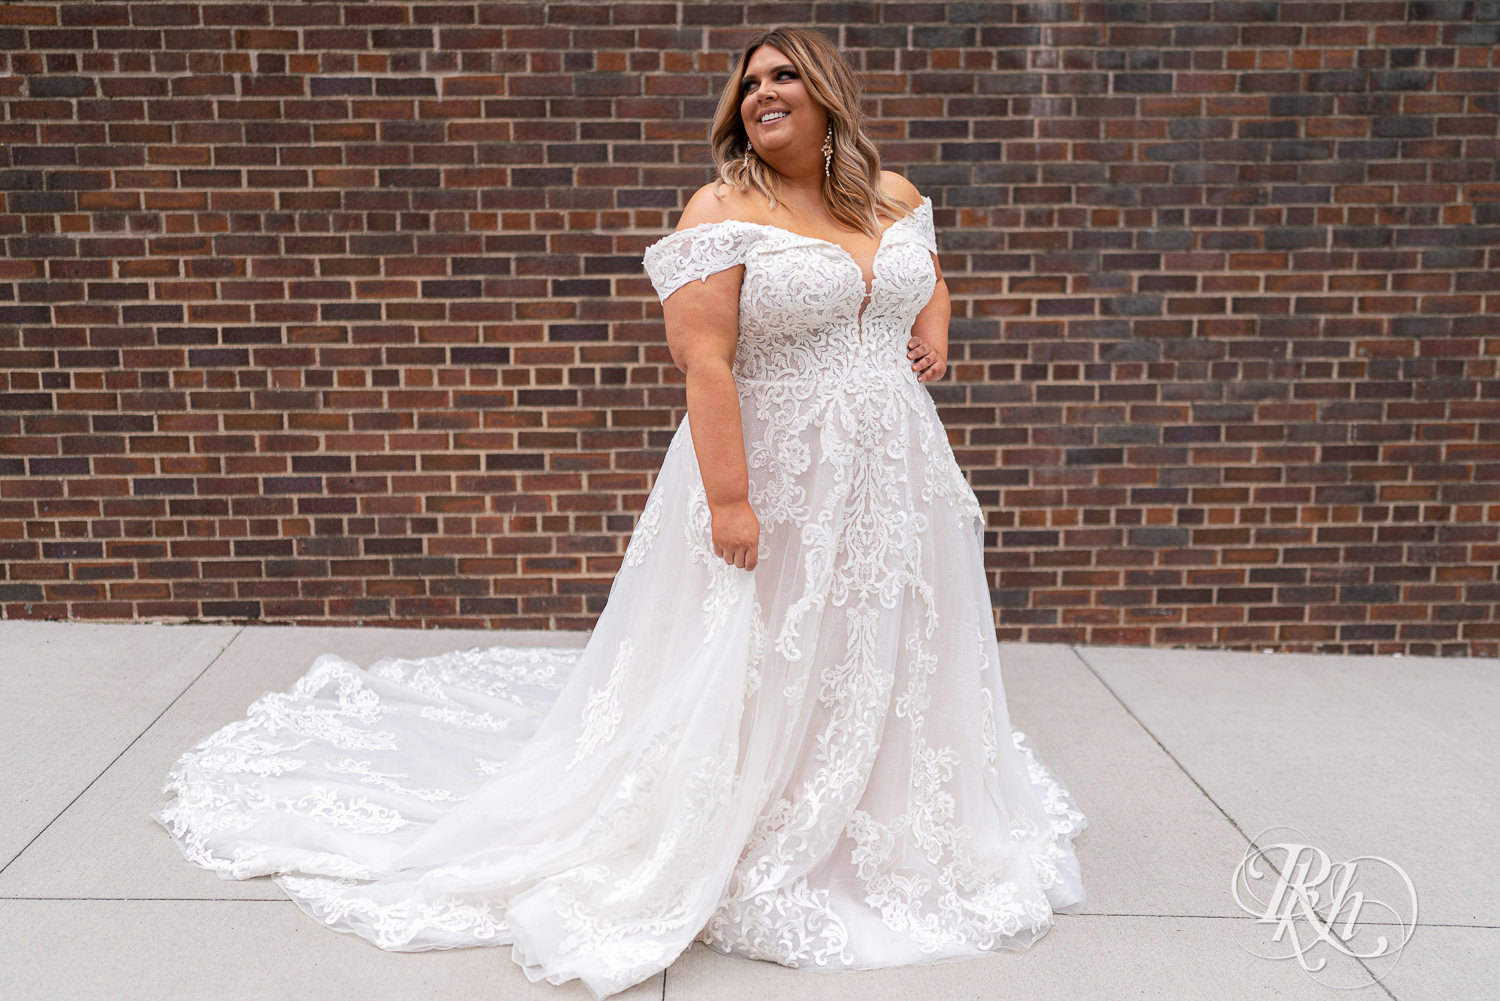 Plus size bride smiling in wedding dress in Minneapolis, Minnesota.